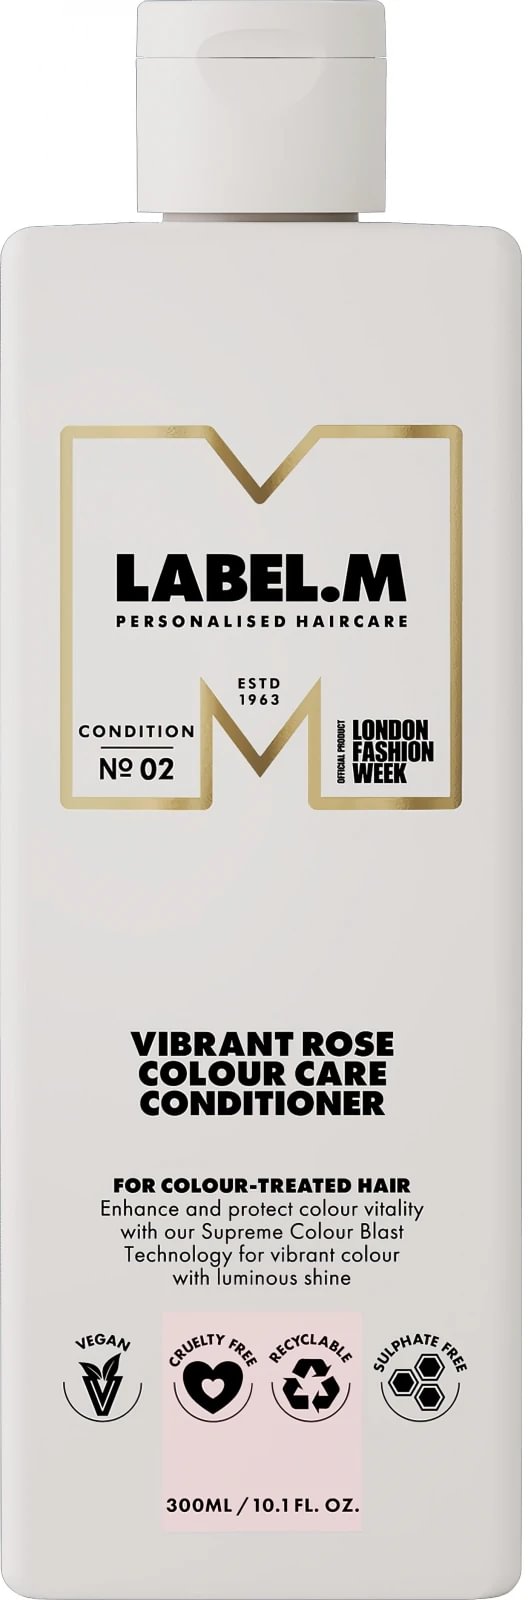 Label.m Professional Vibrant Rose Colour Care Conditioner 1000 ml